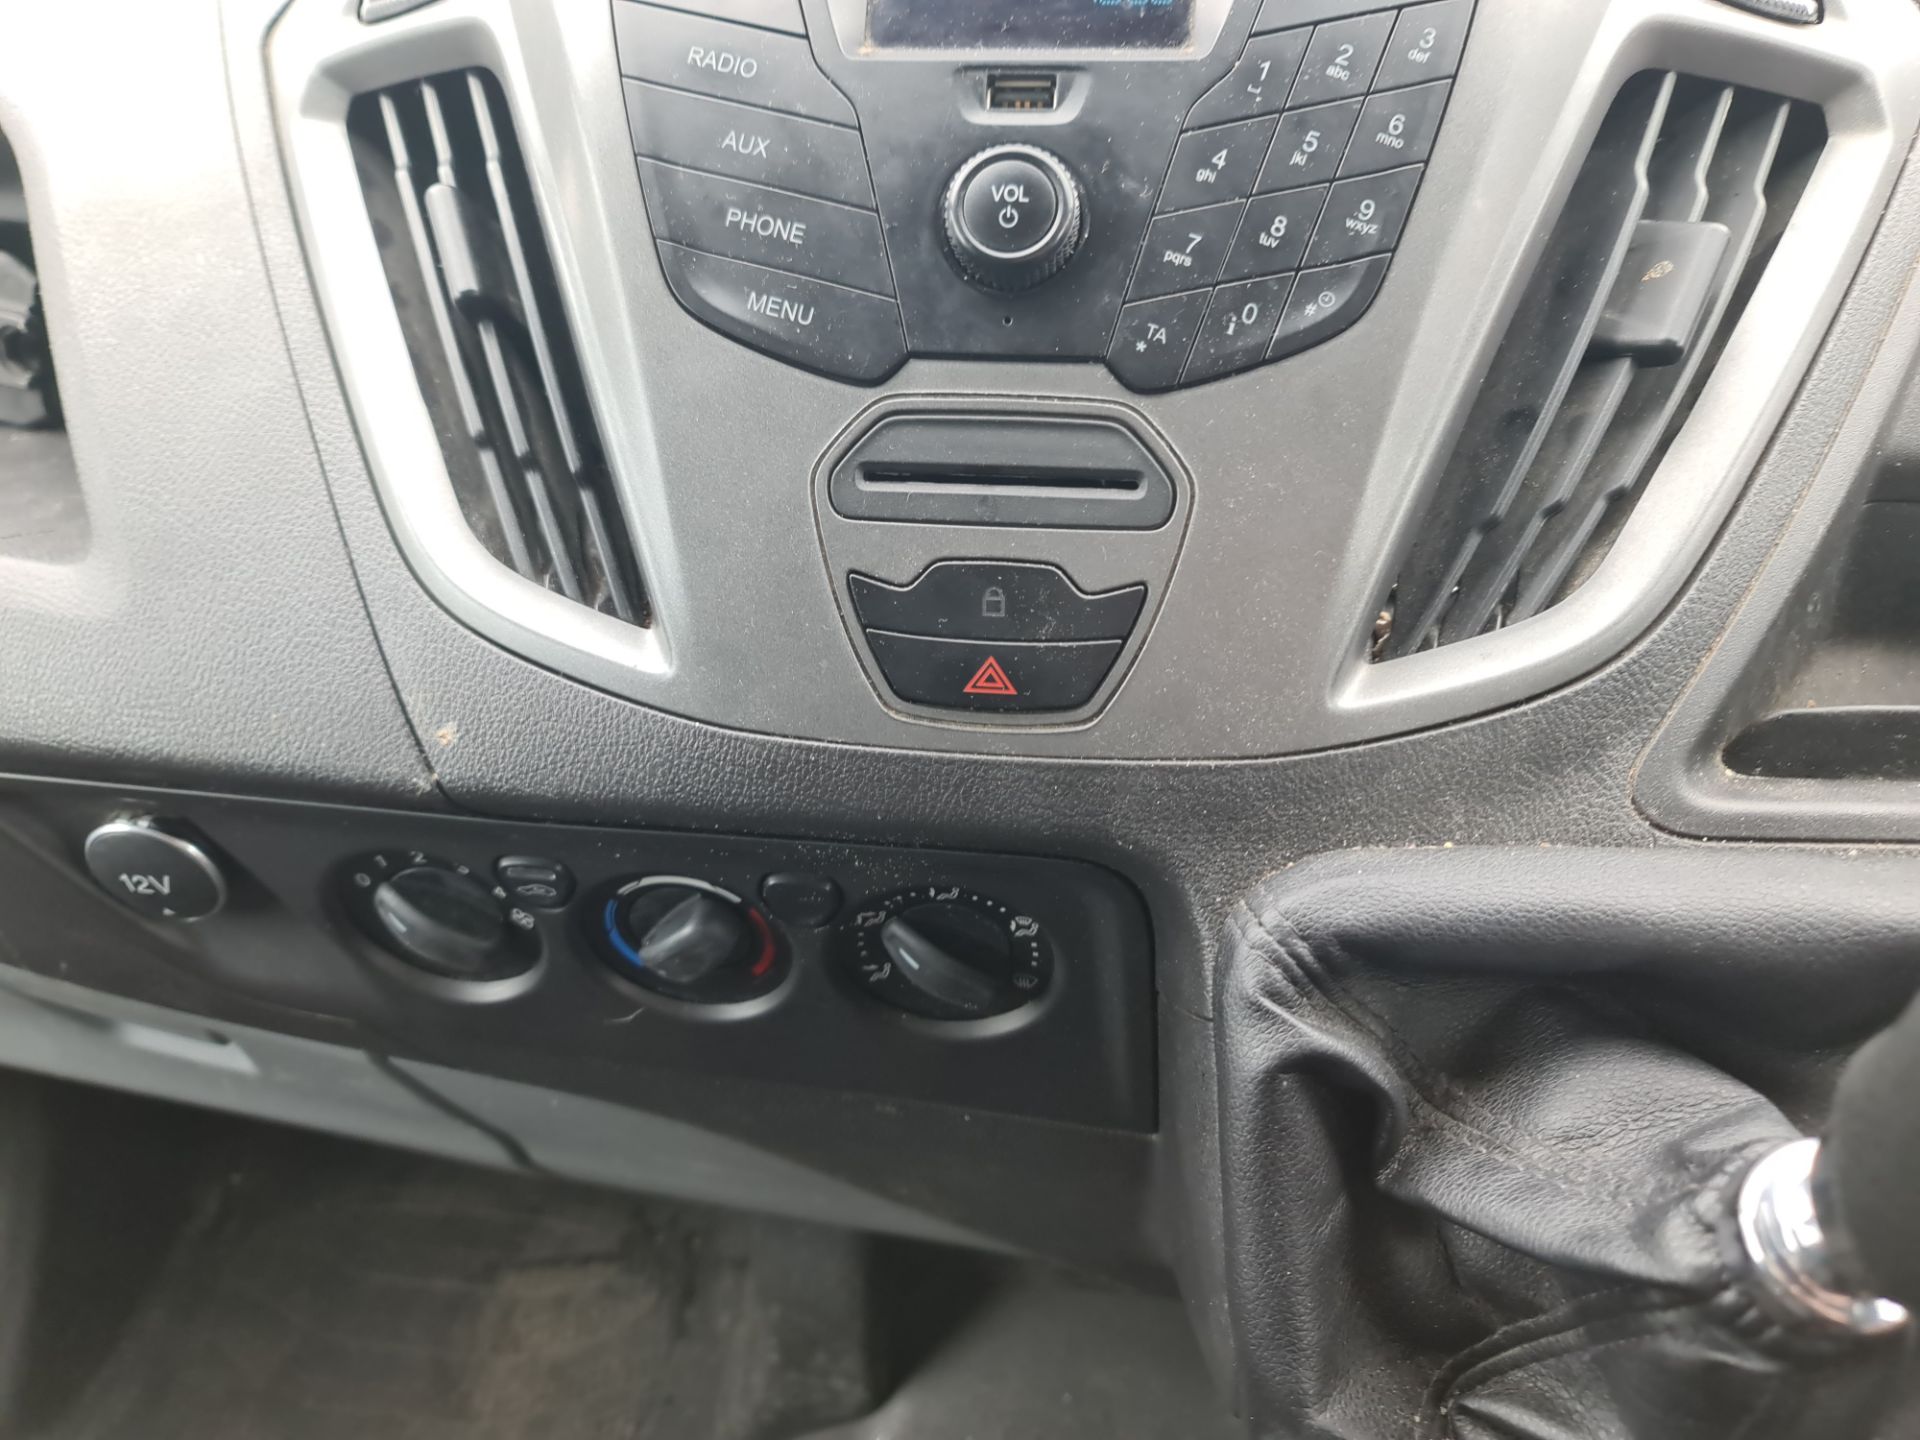 2018 Ford Transit Custom 270 panel van - Image 69 of 71